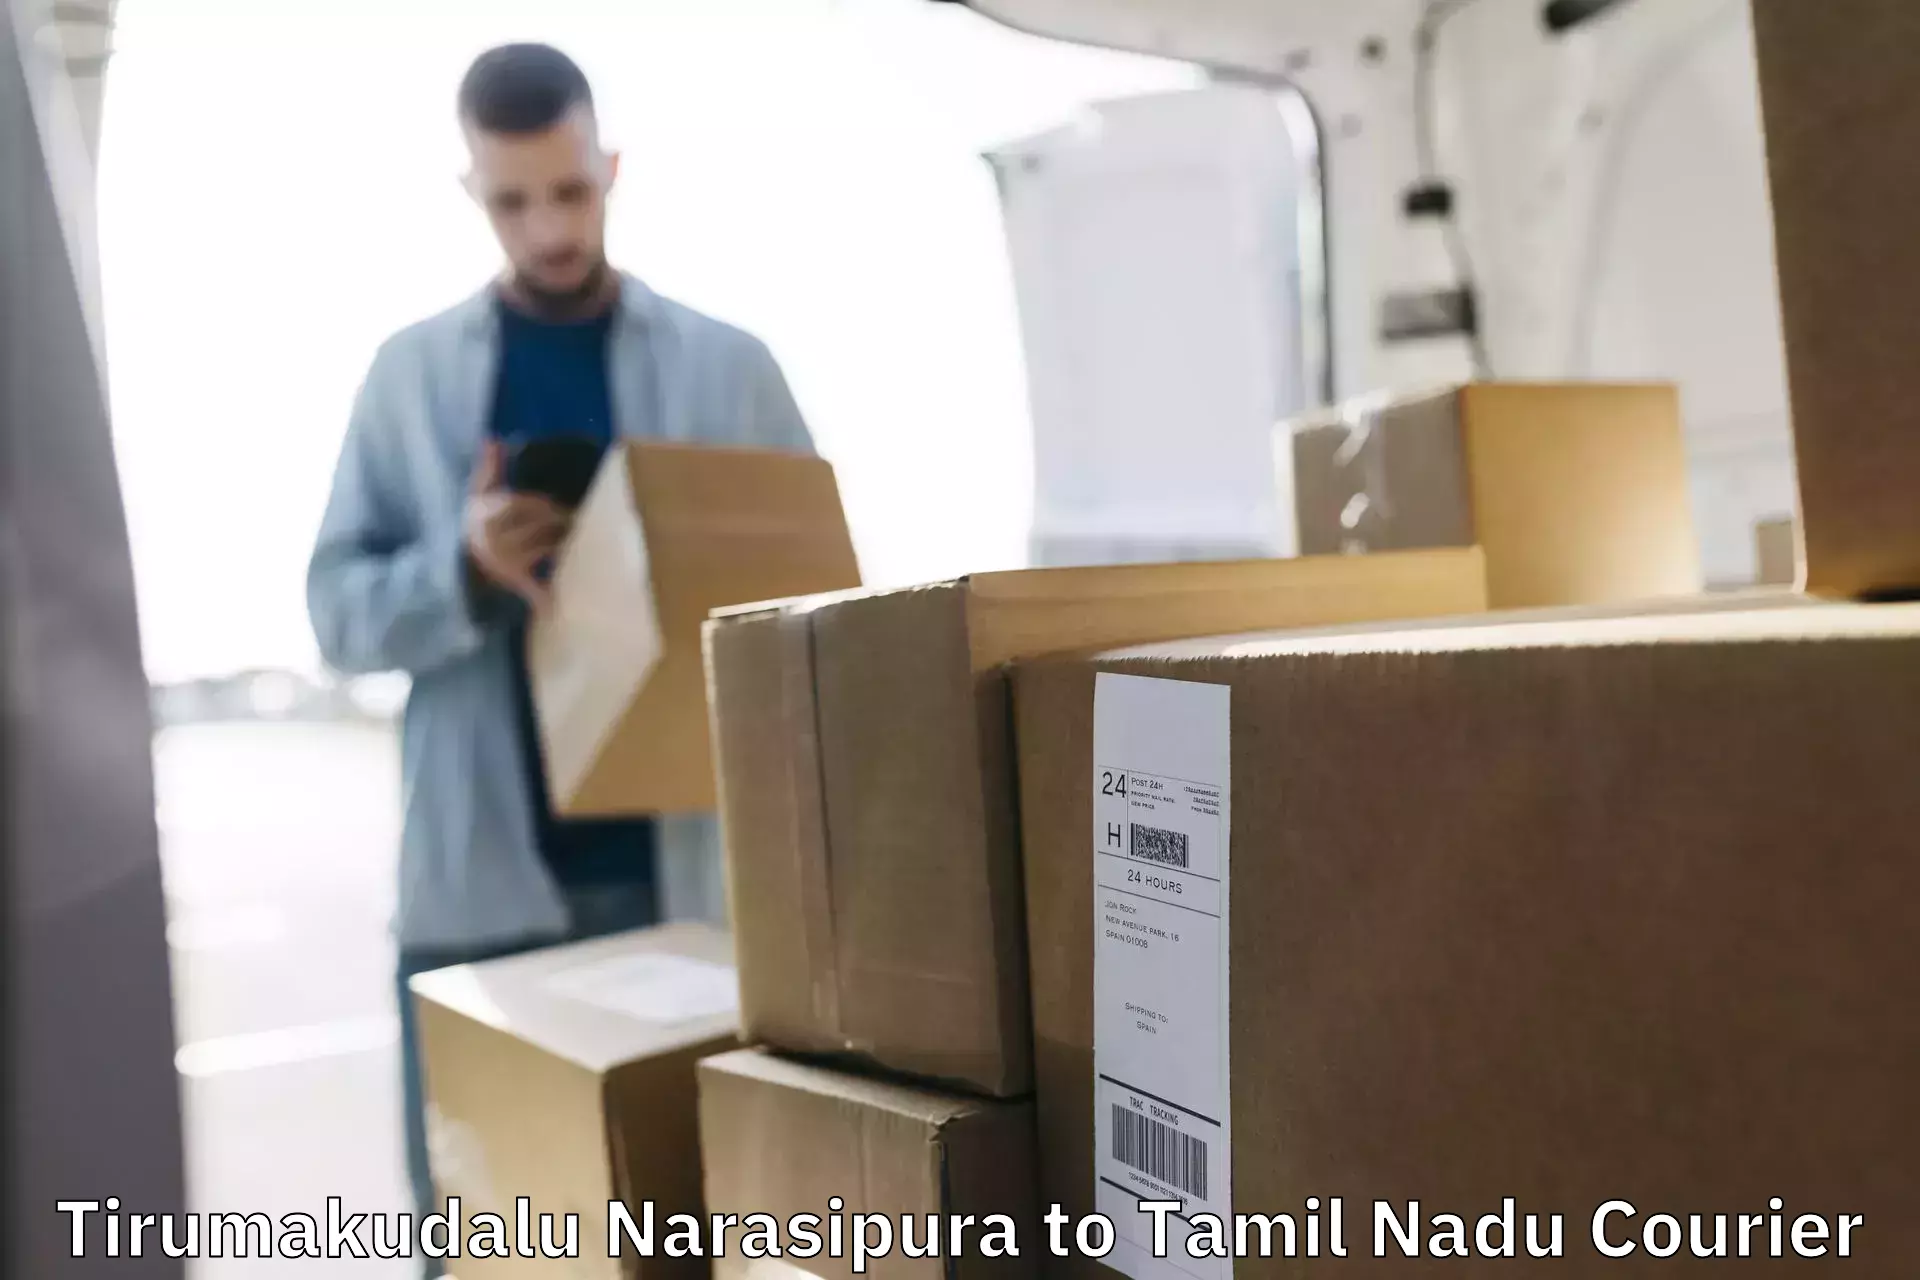 Reliable delivery network Tirumakudalu Narasipura to Puliampatti